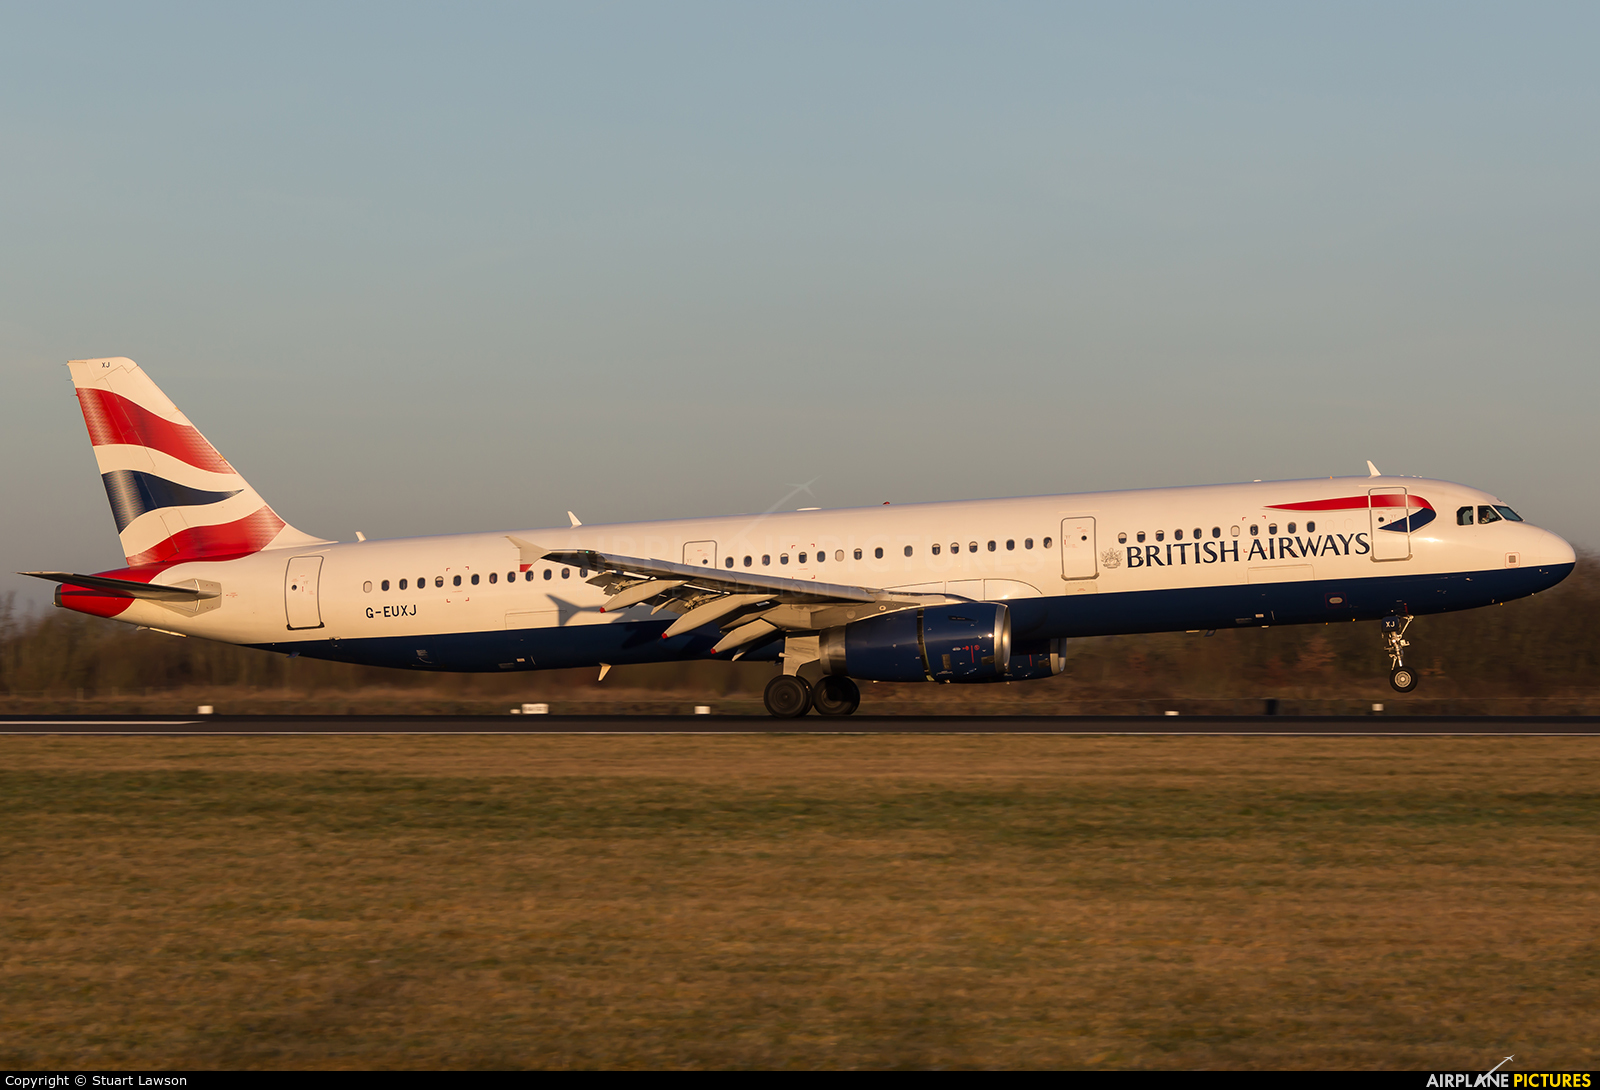 British Airways G-EUXJ aircraft at Manchester